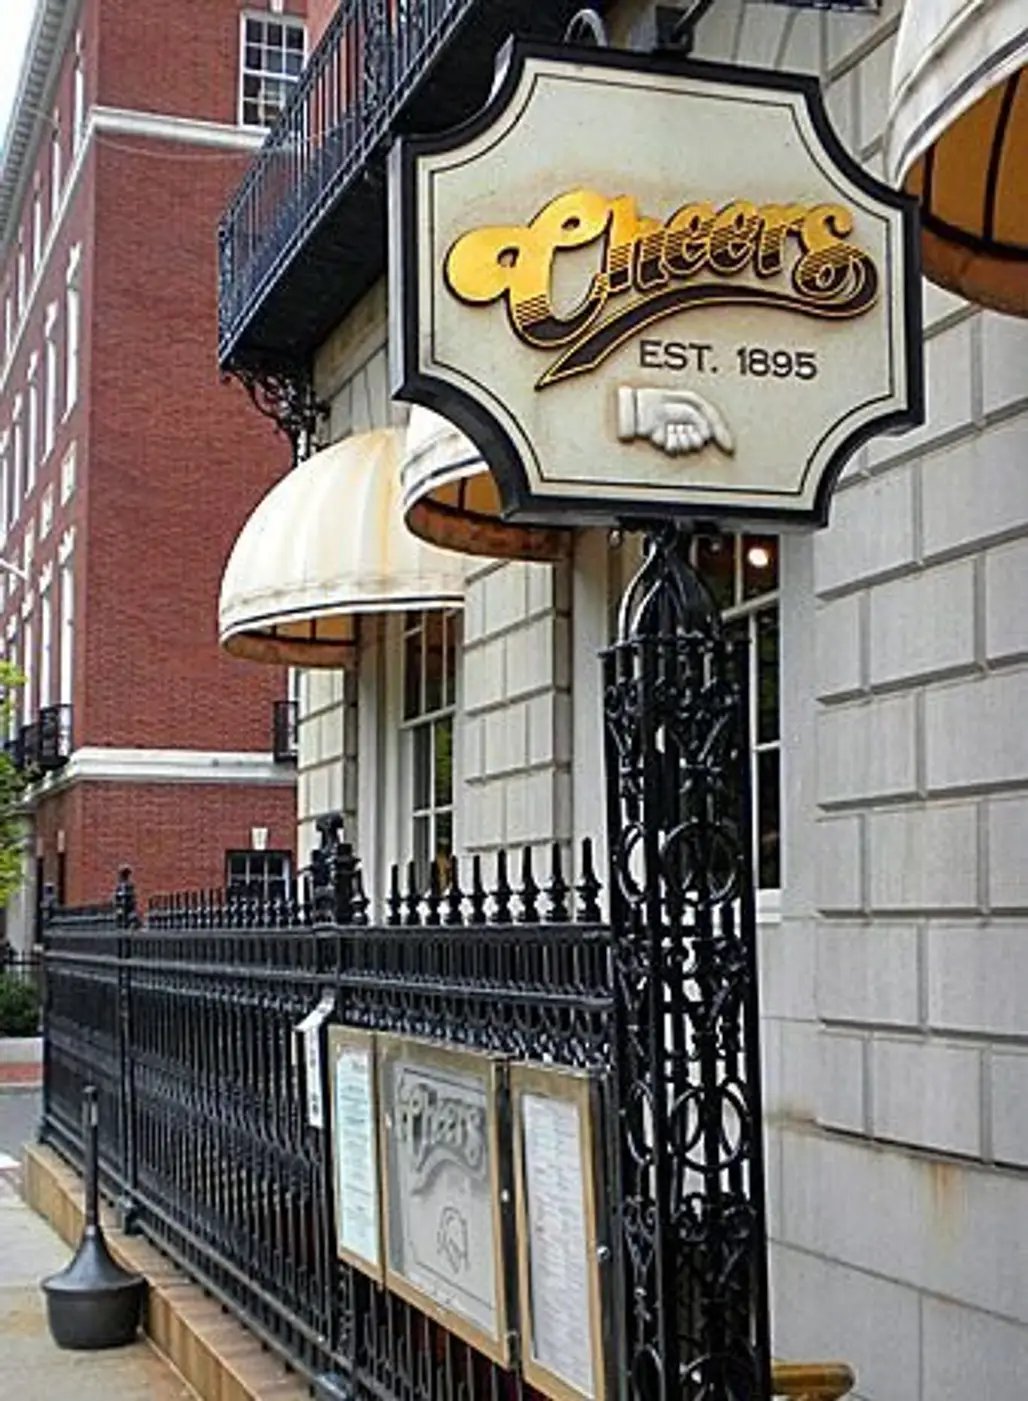 Cheers Beacon Hill pub,restaurant,facade,EST.,1895,